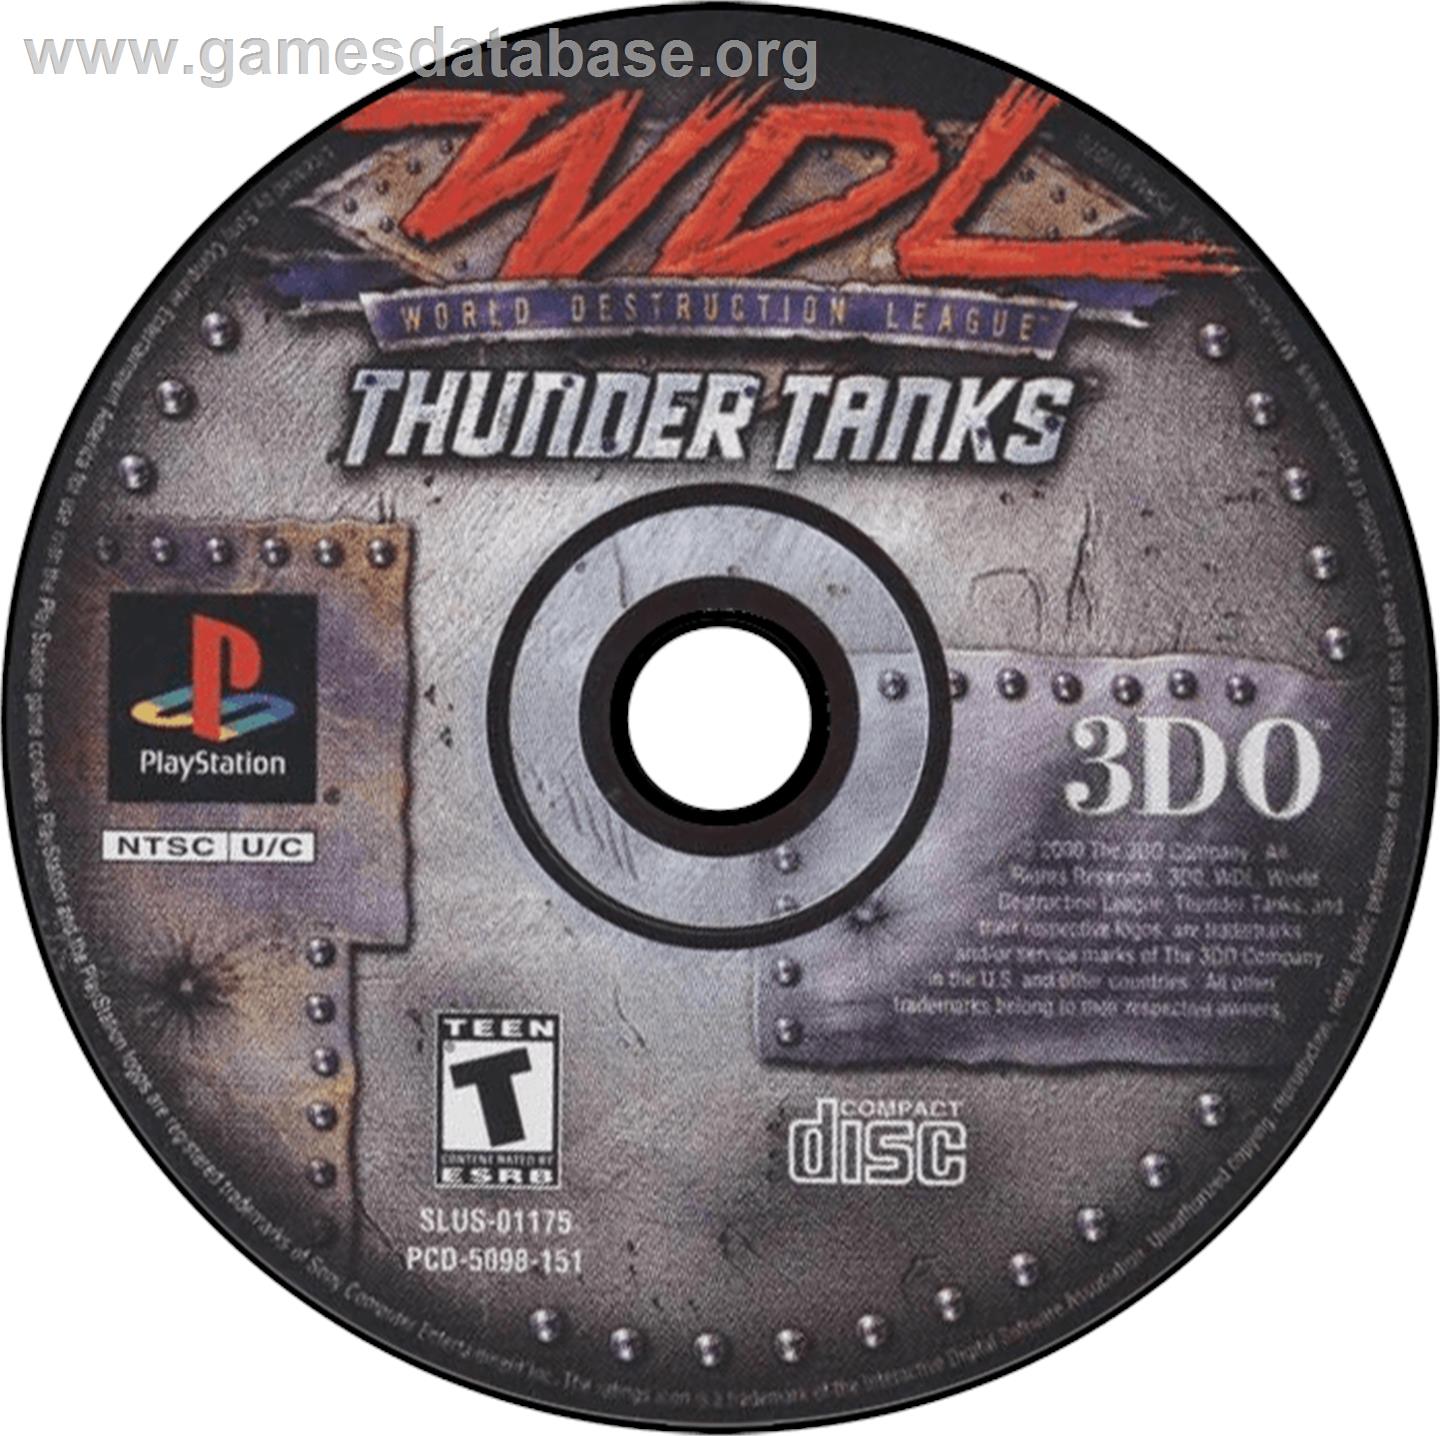 World Destruction League: Thunder Tanks - Sony Playstation - Artwork - Disc